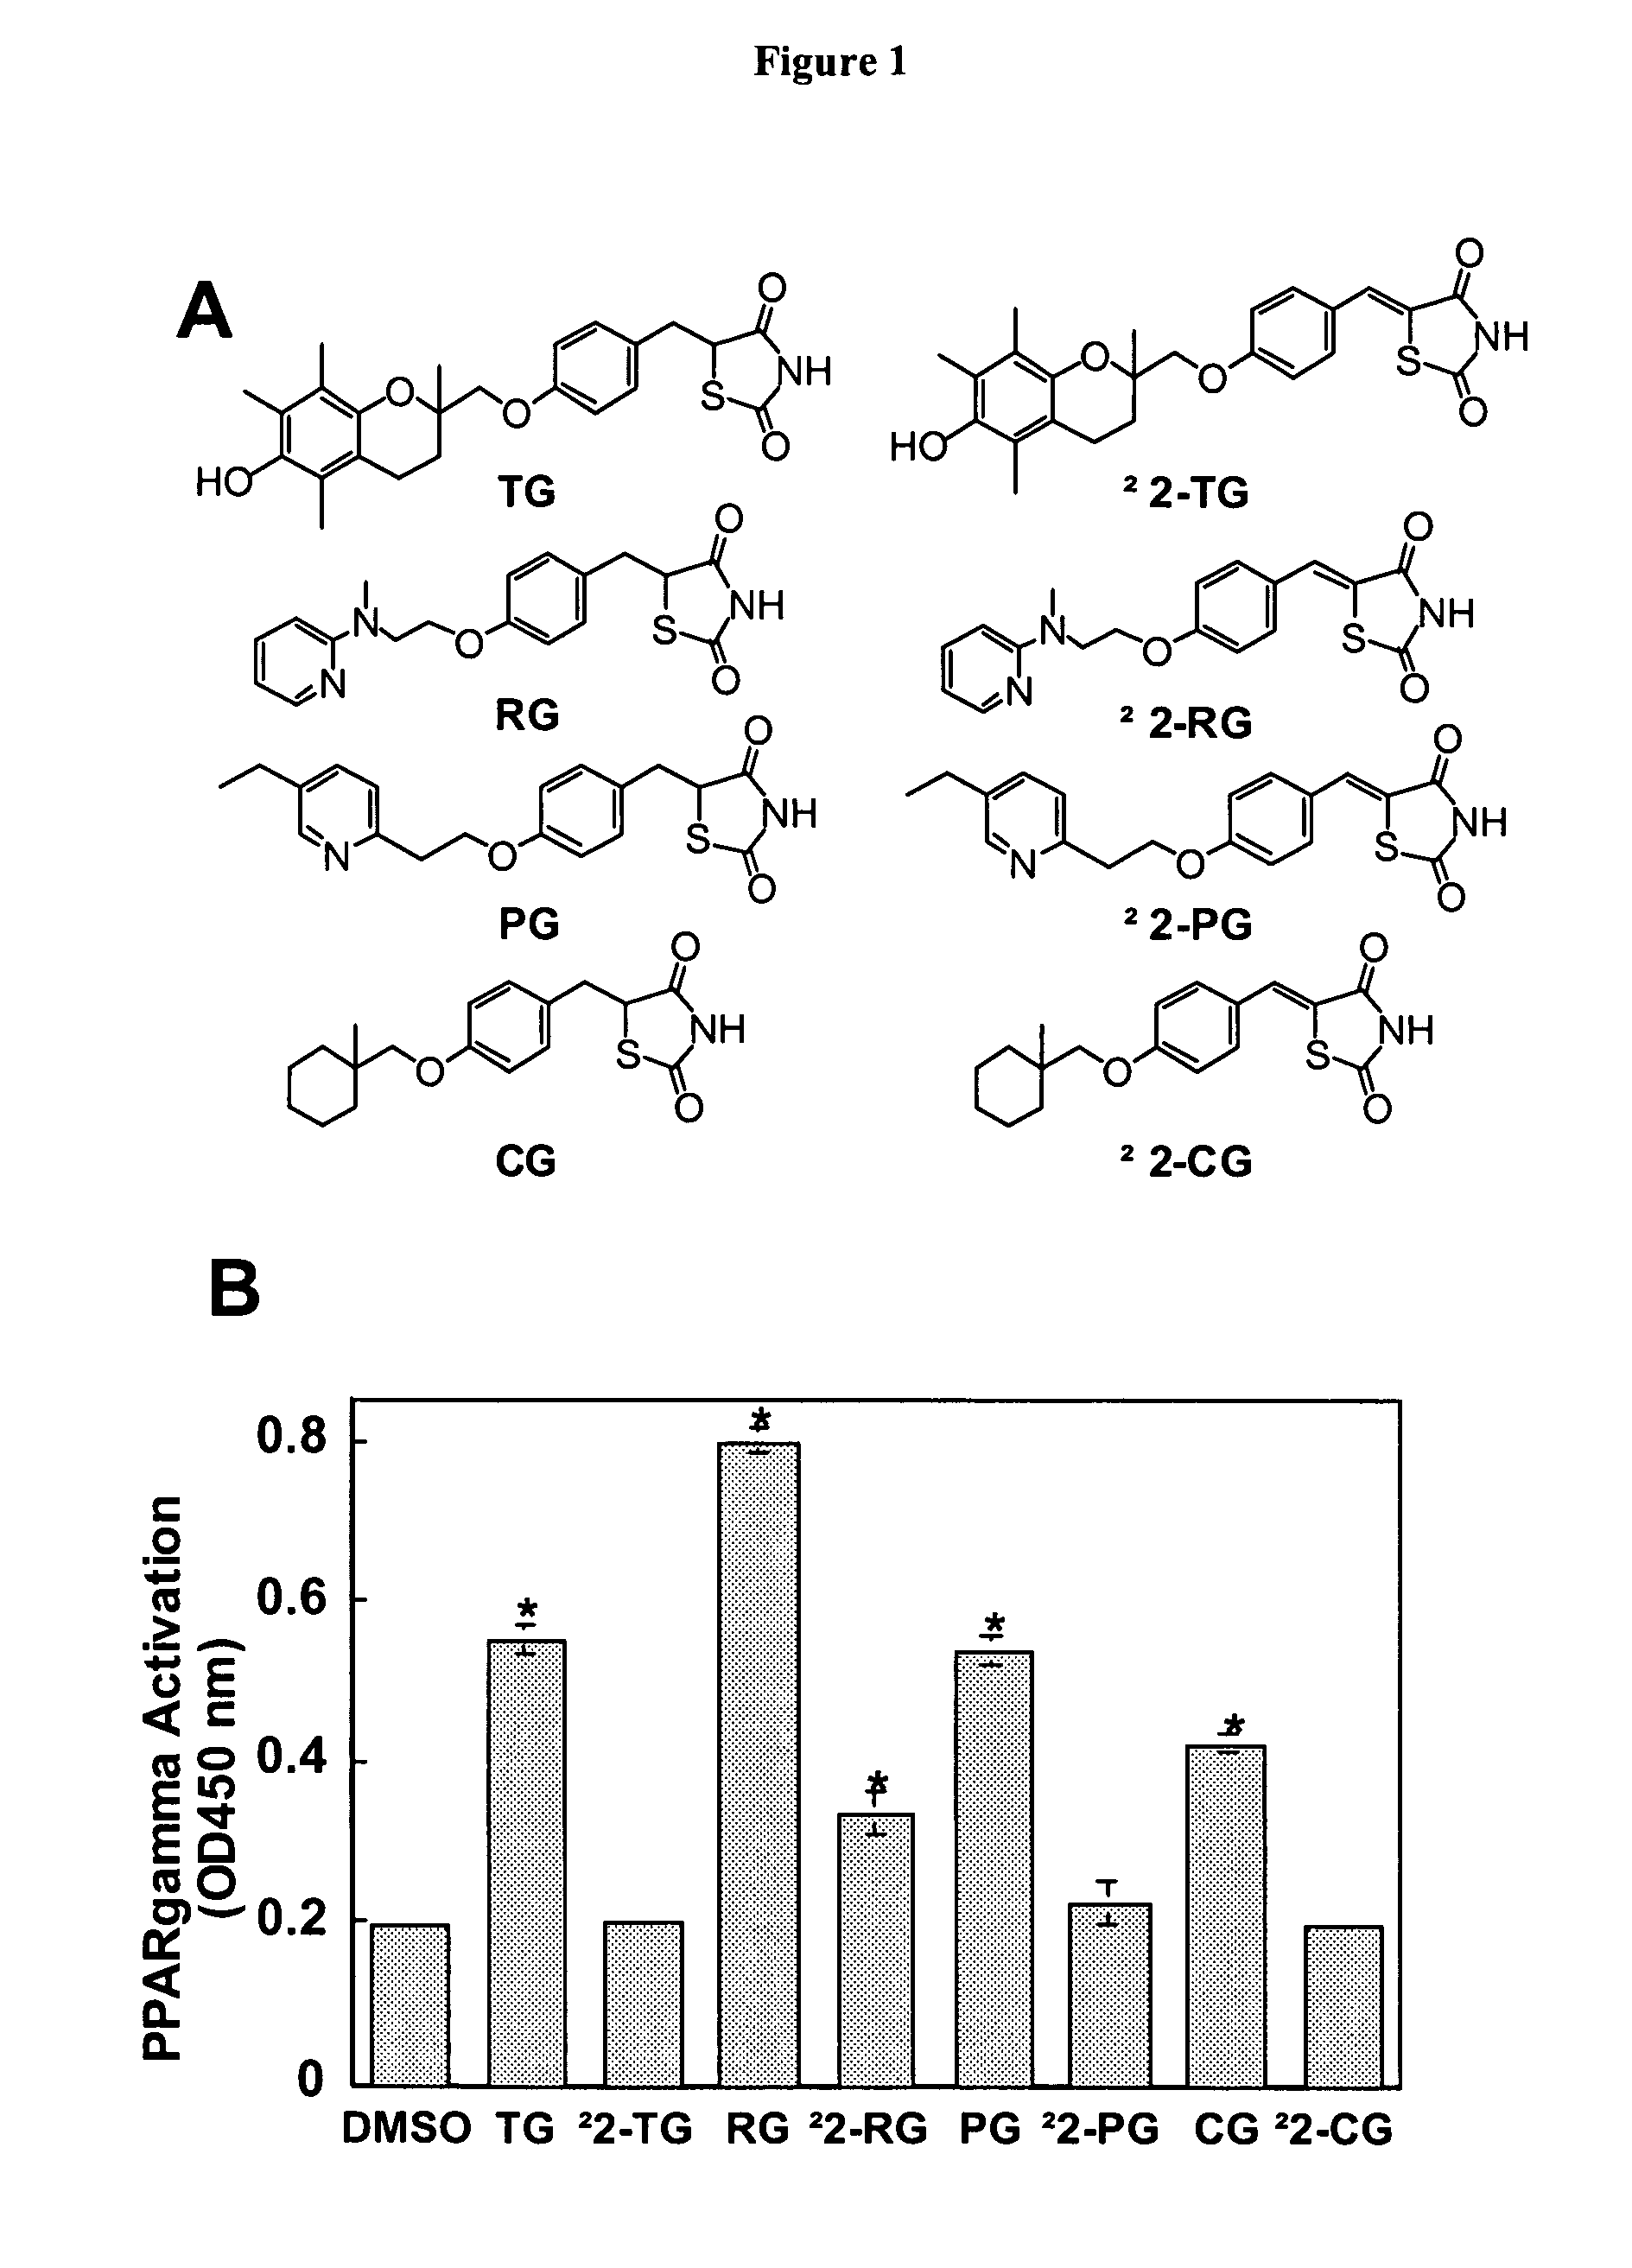 Small molecule Bcl-xL/Bcl-2 binding inhibitors